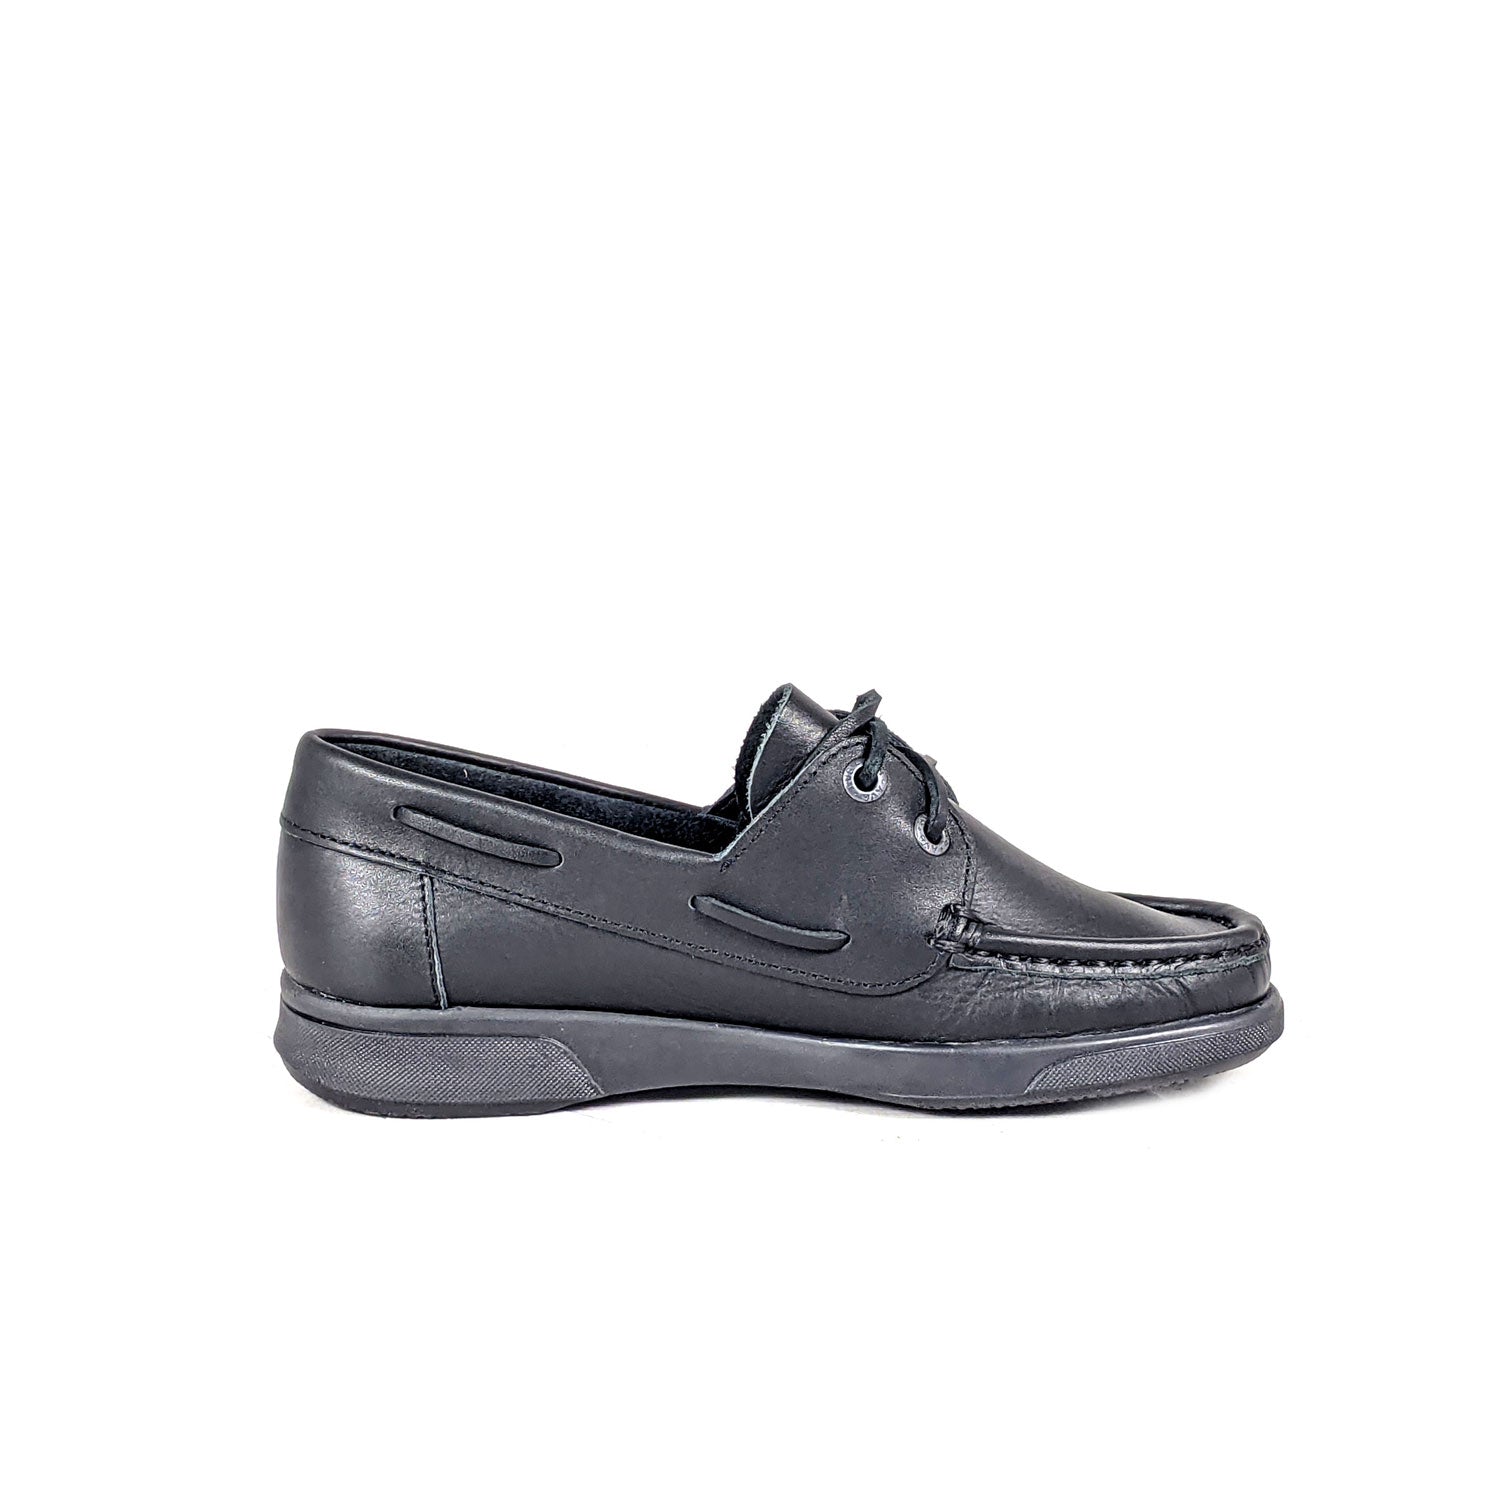 Dubarry Kapley Laced Av8 Shoe - Black 2 Shaws Department Stores